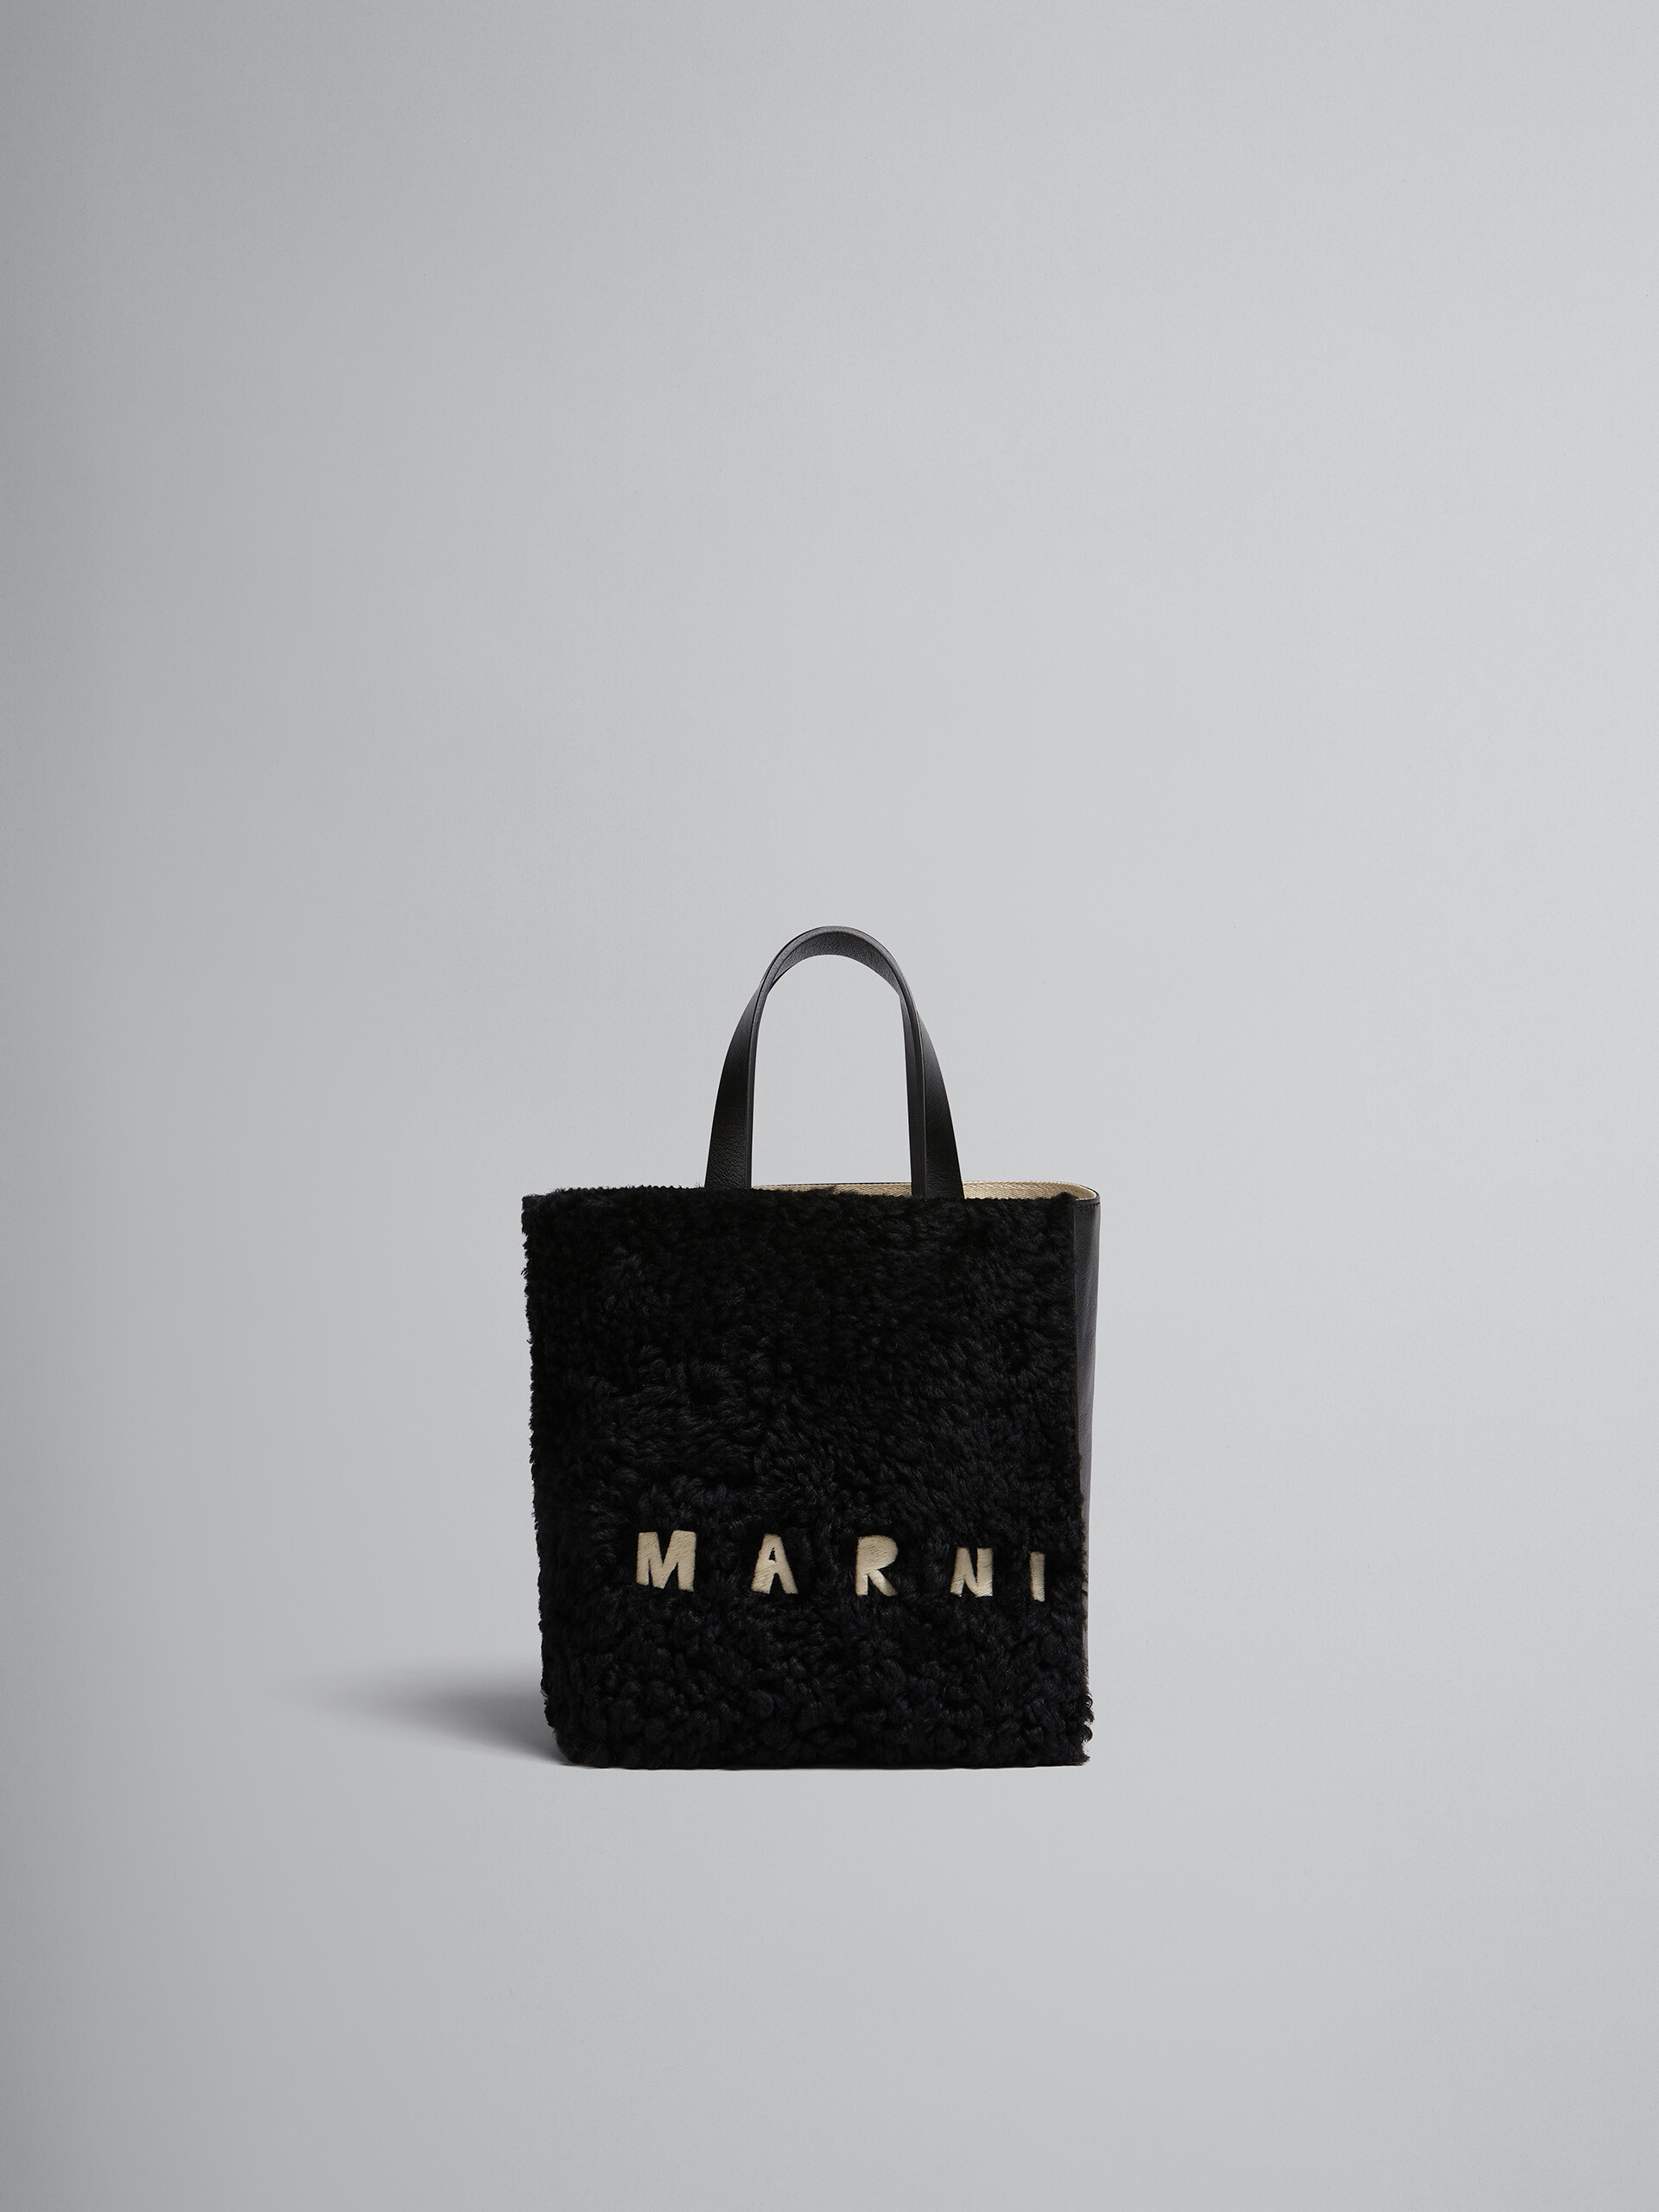 MUSEO SOFT mini bag in black shearling - Shopping Bags - Image 1